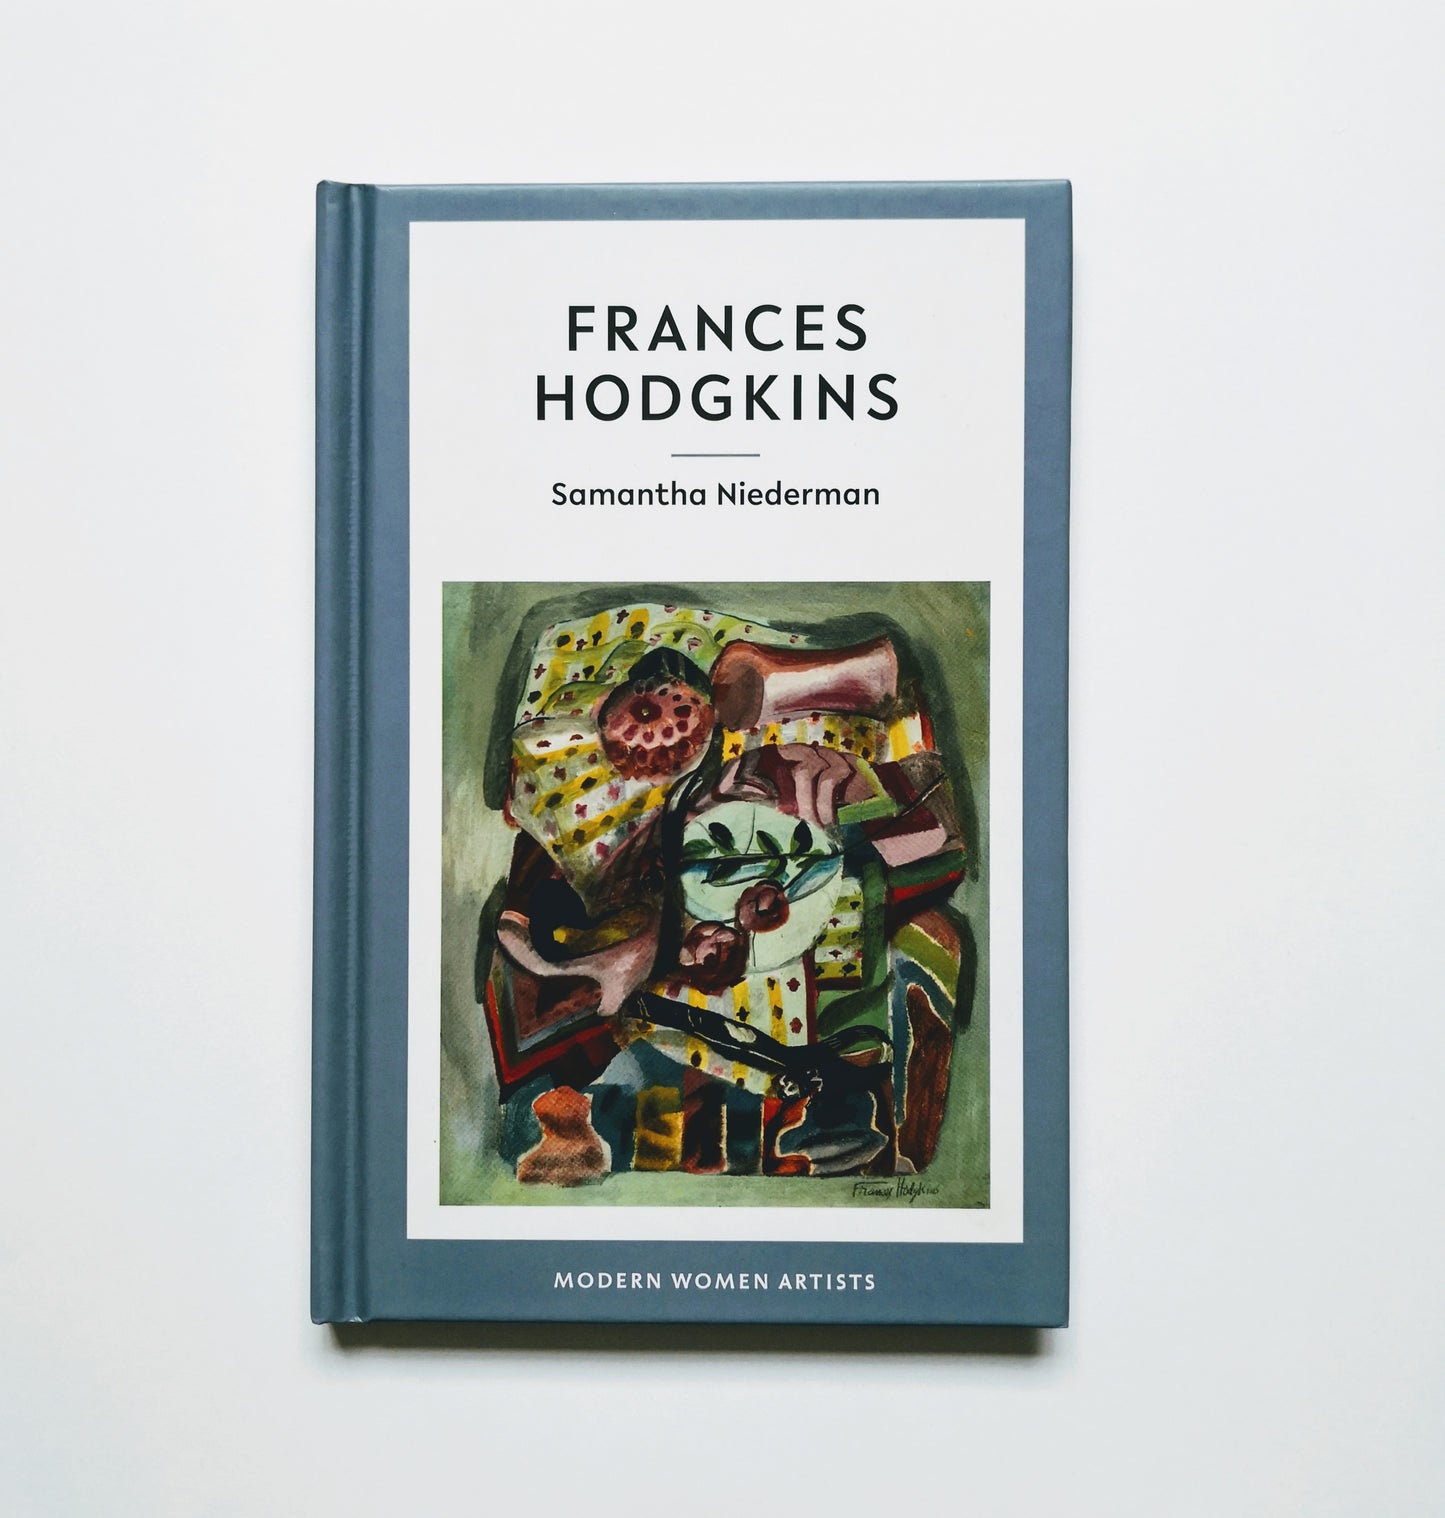 Frances Hodgkins by Samantha Niederman /// #2